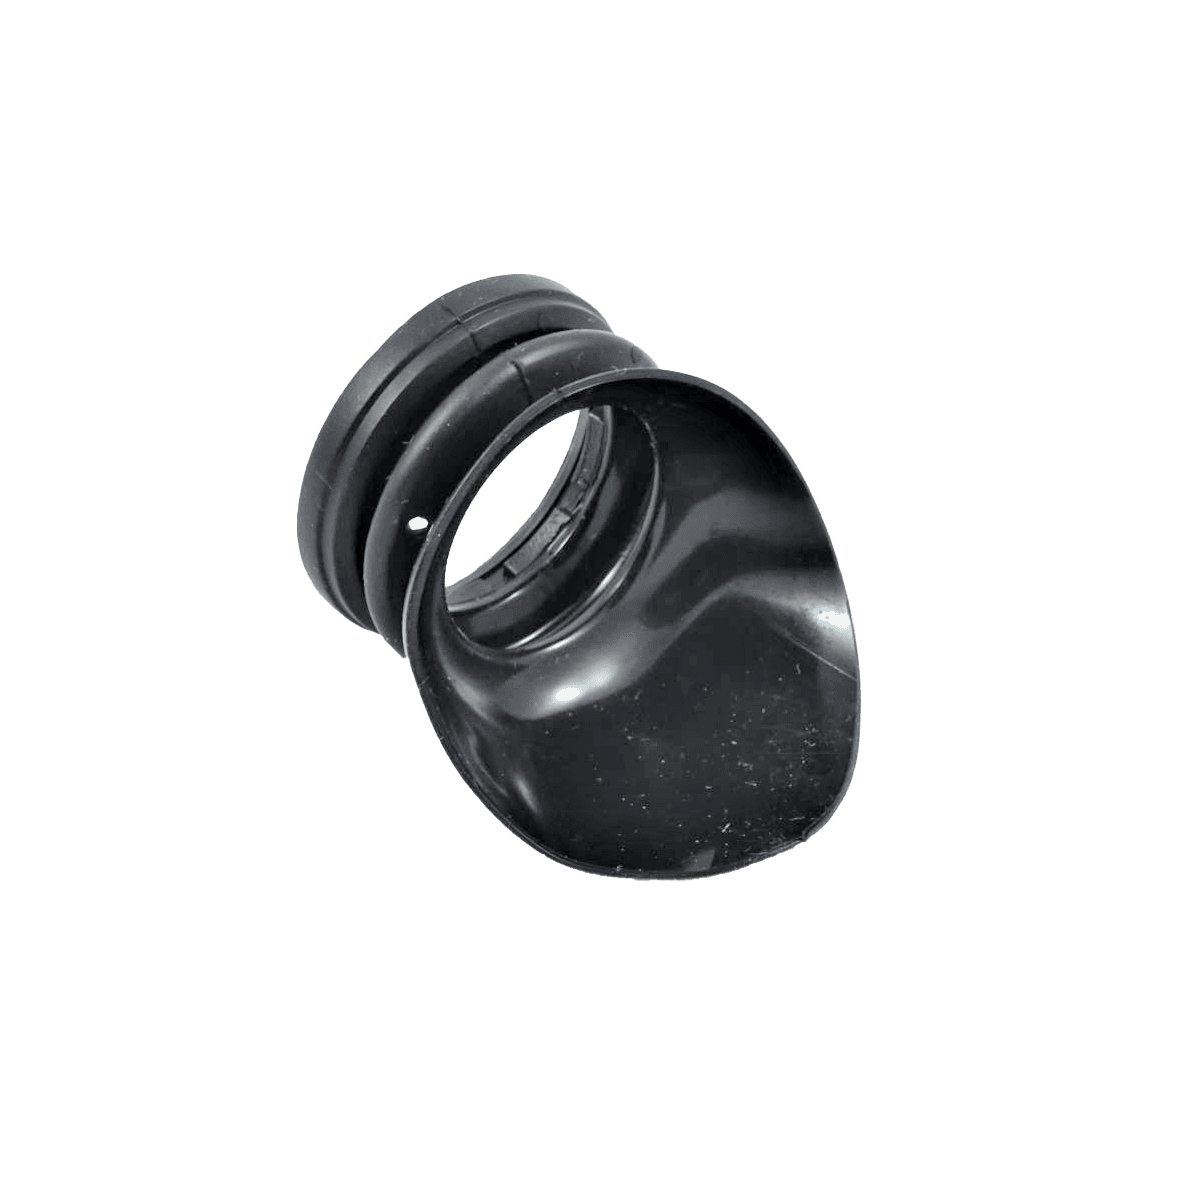 Eyecup Rubber PVS-7 / PVS-14 / DTNVG